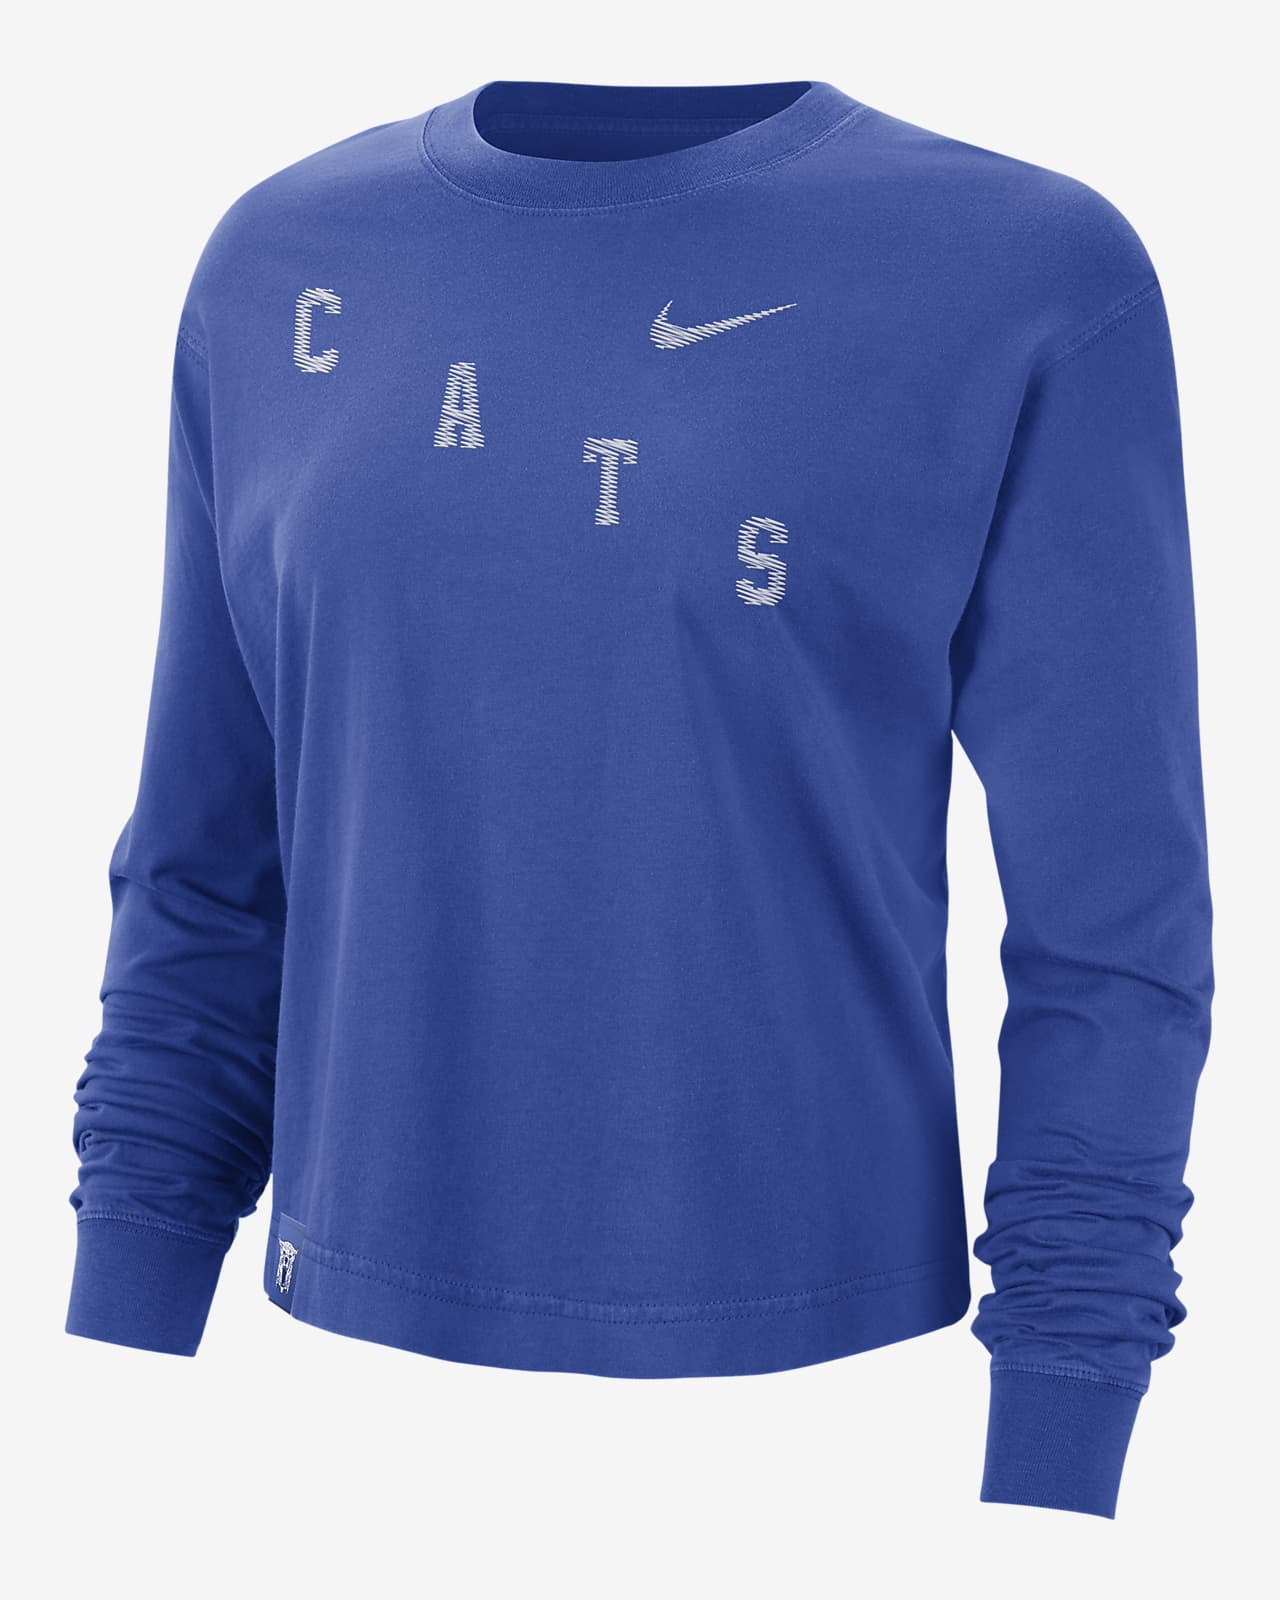 Kentucky Women's Nike College Long-Sleeve T-Shirt